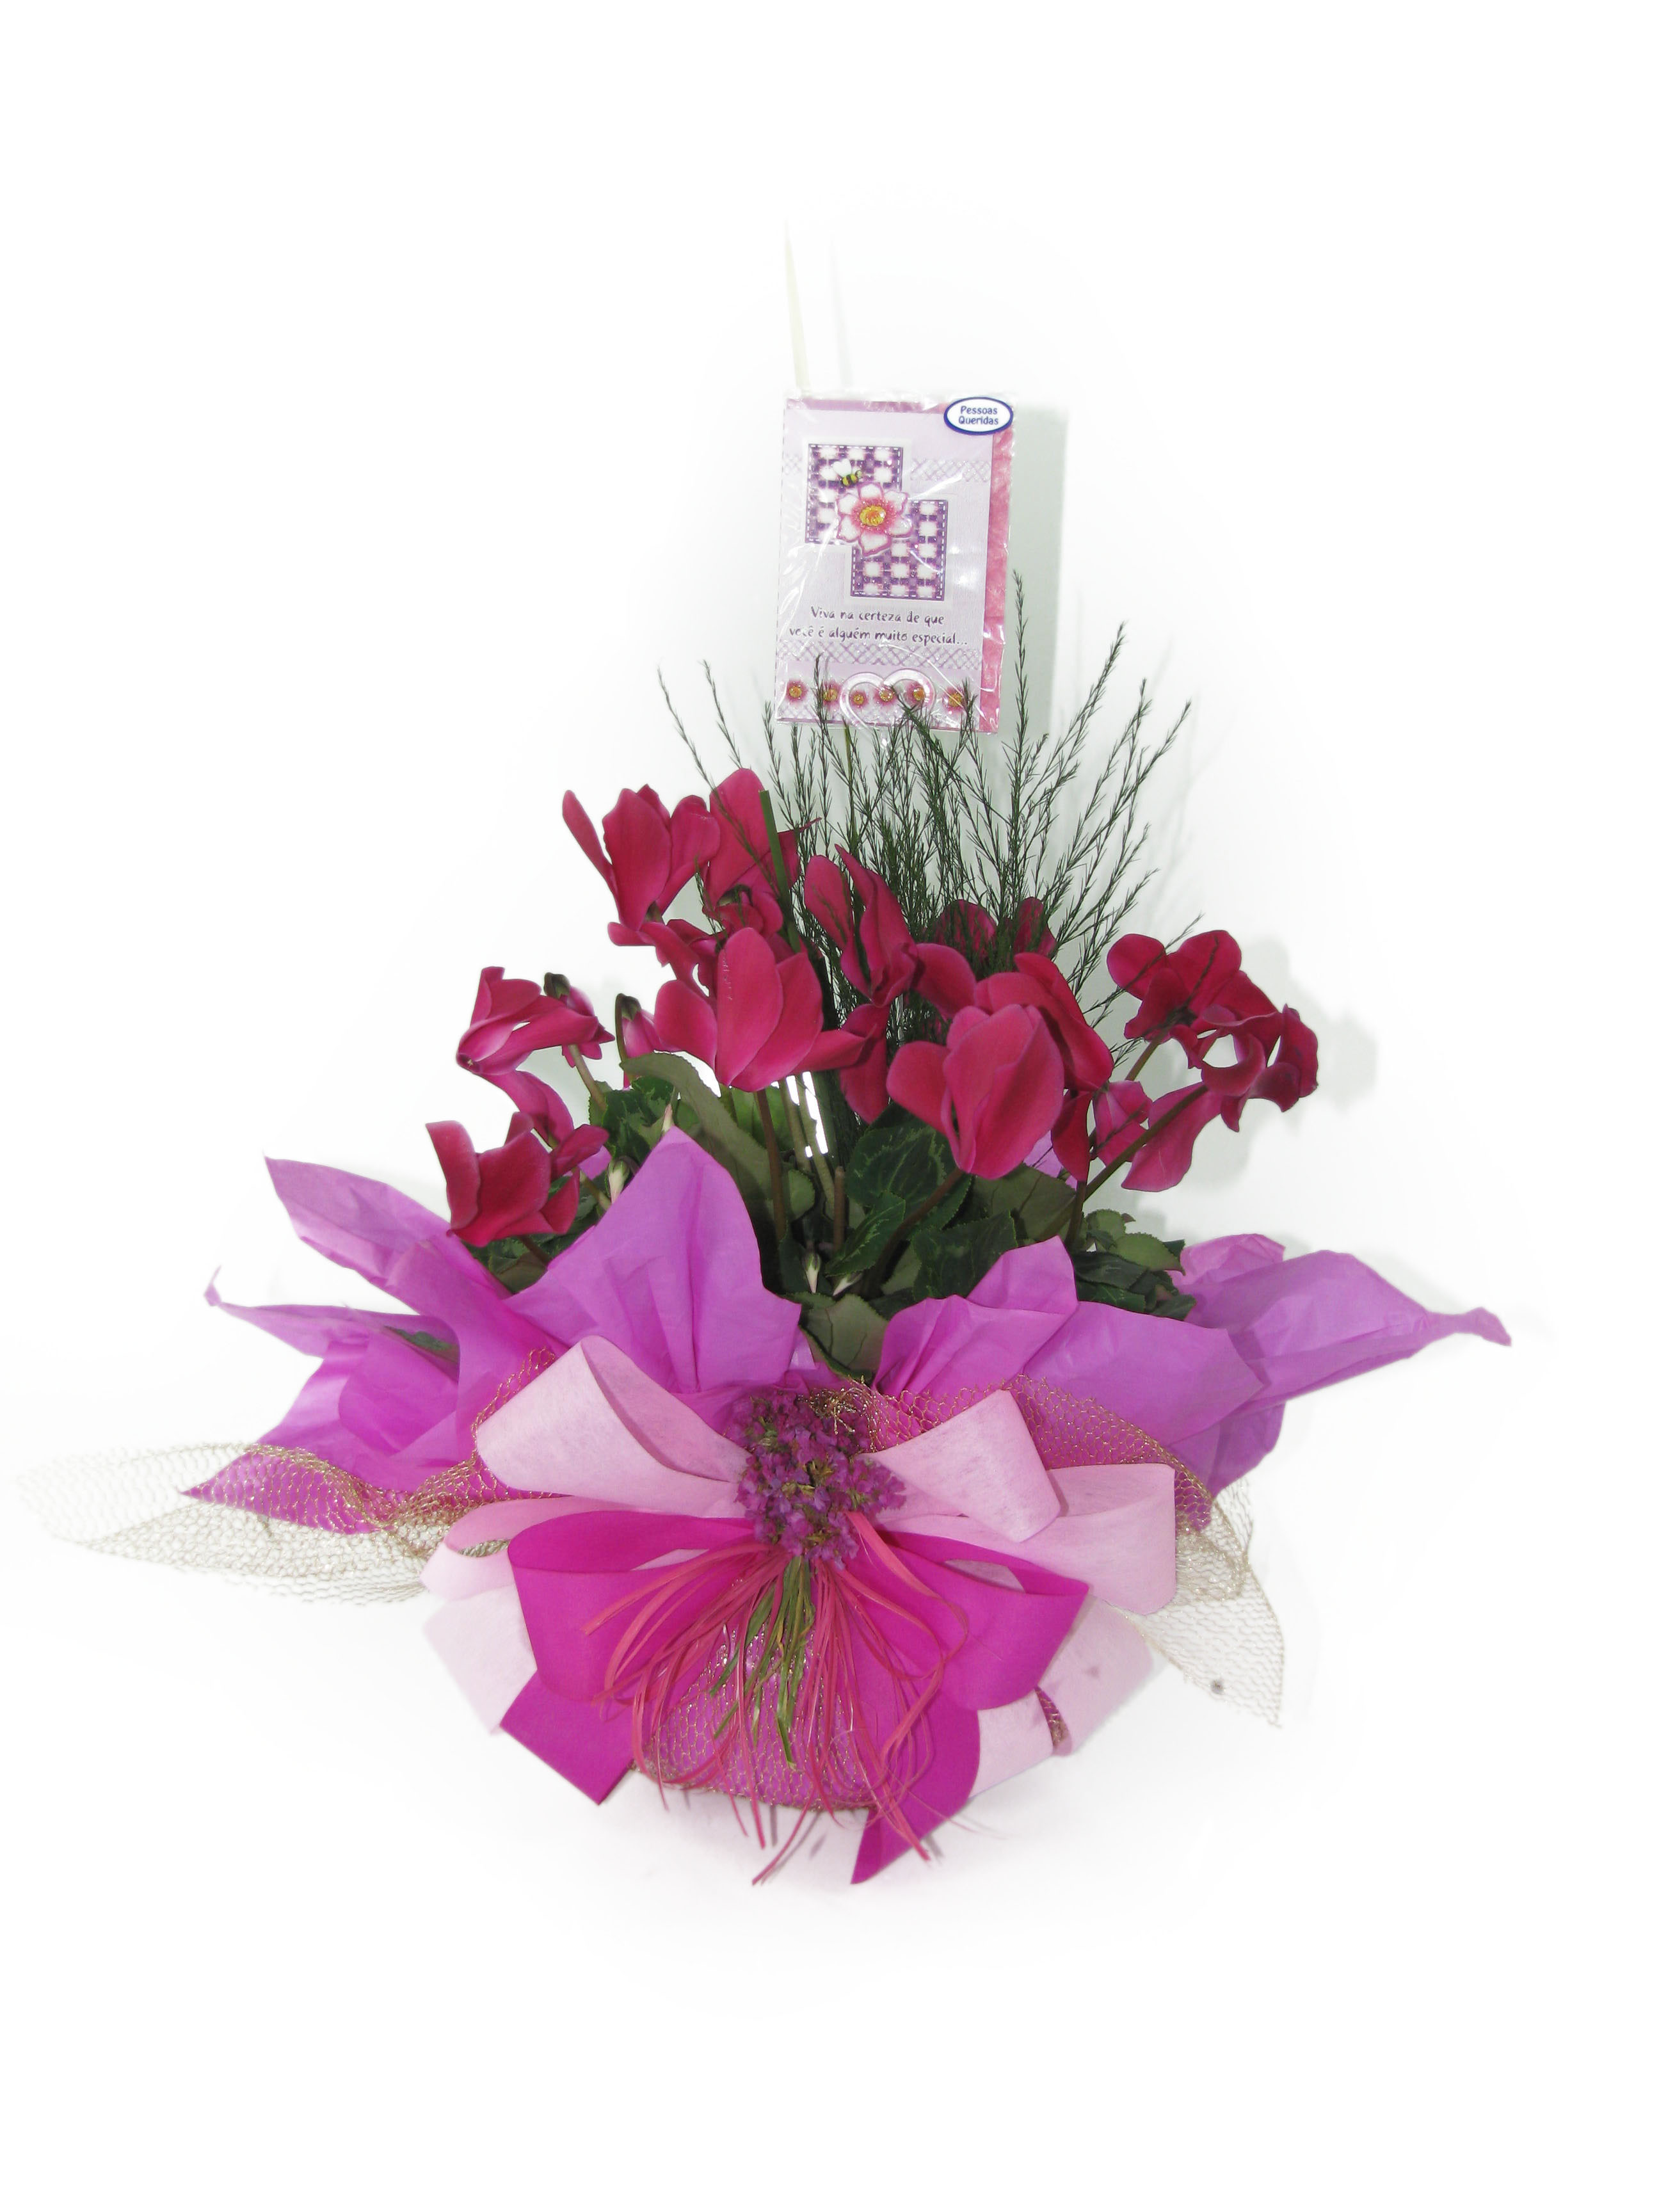 Flores Savassi - Como cuidar e entrega online de ciclame.